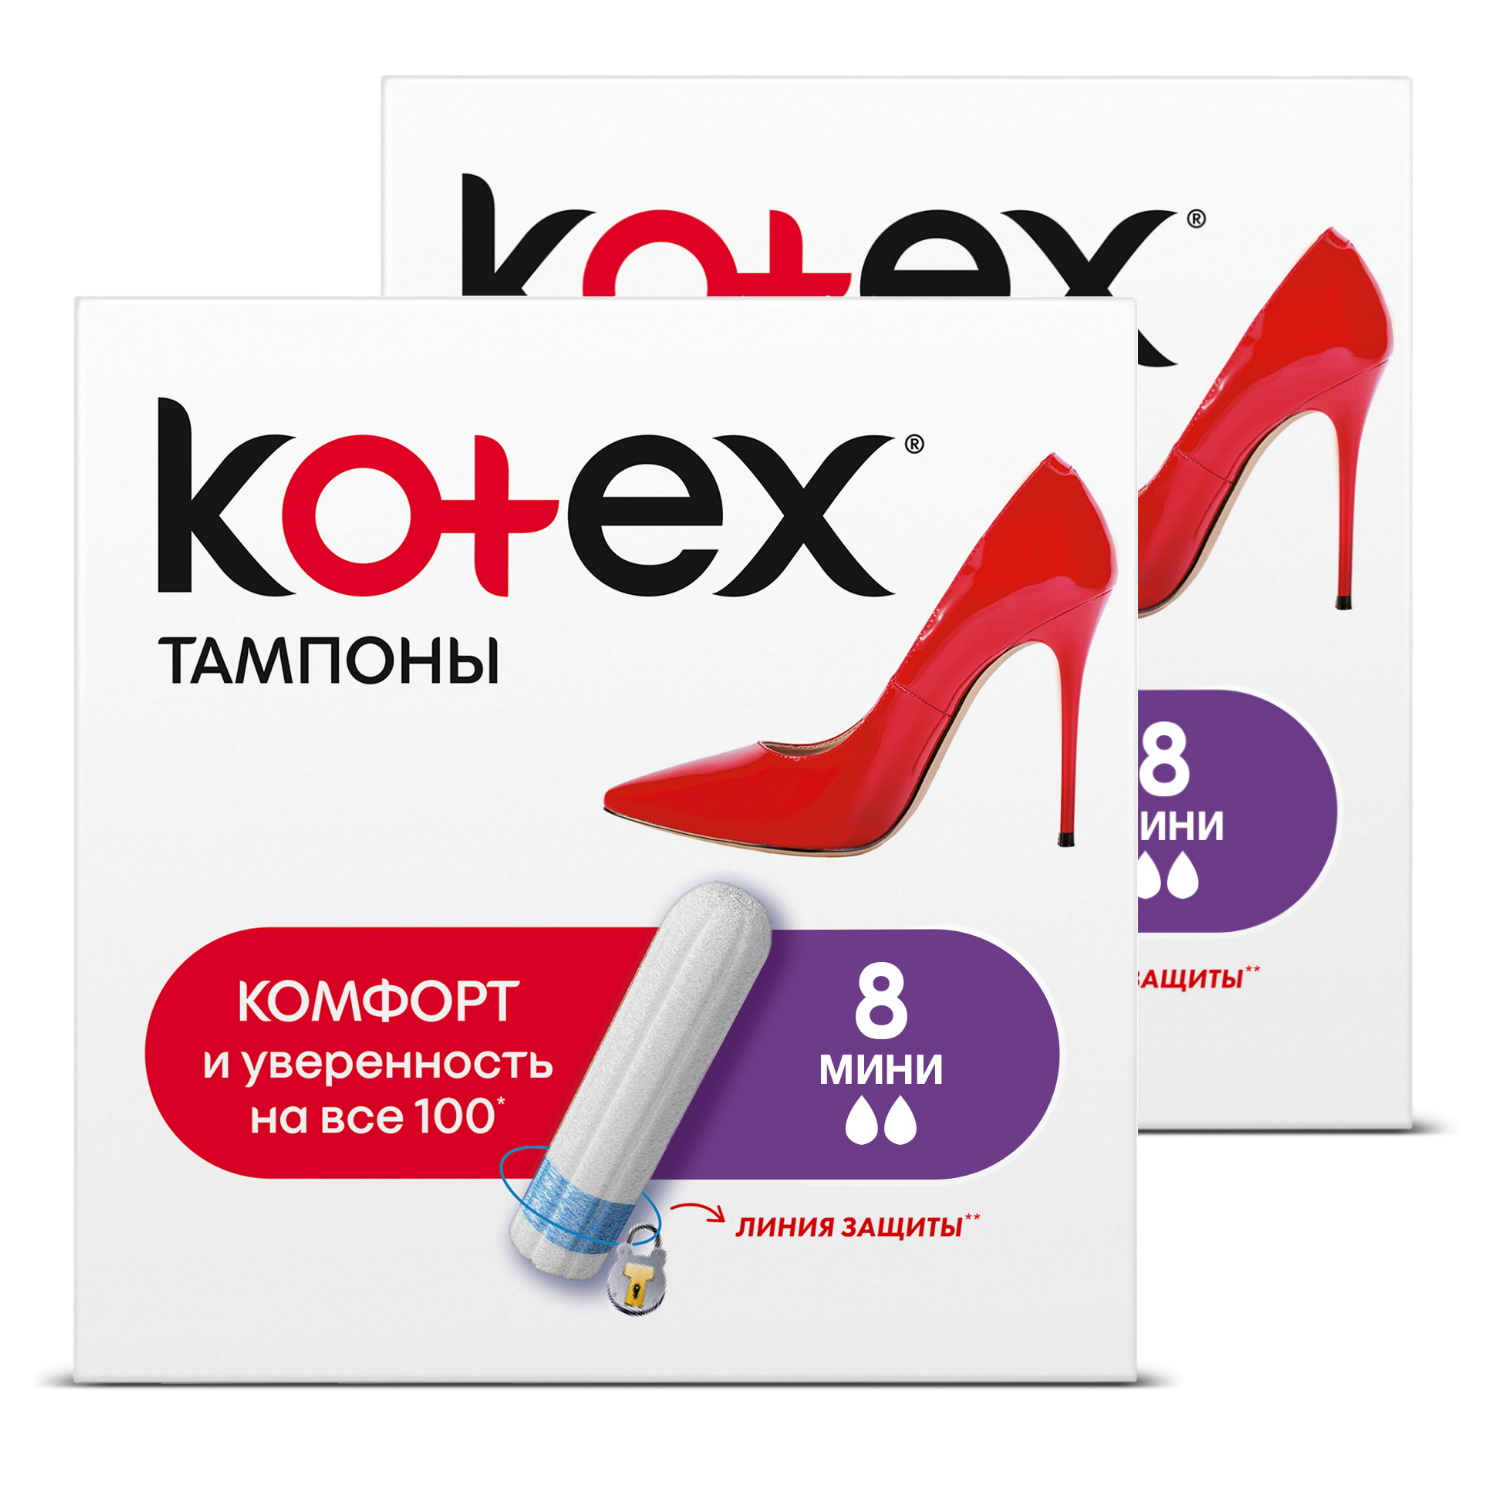 Тампоны KOTEX МИНИ 8 шт (Набор из 2 штук) тампоны kotex с апликатором супер 8 шт набор из 2 штук